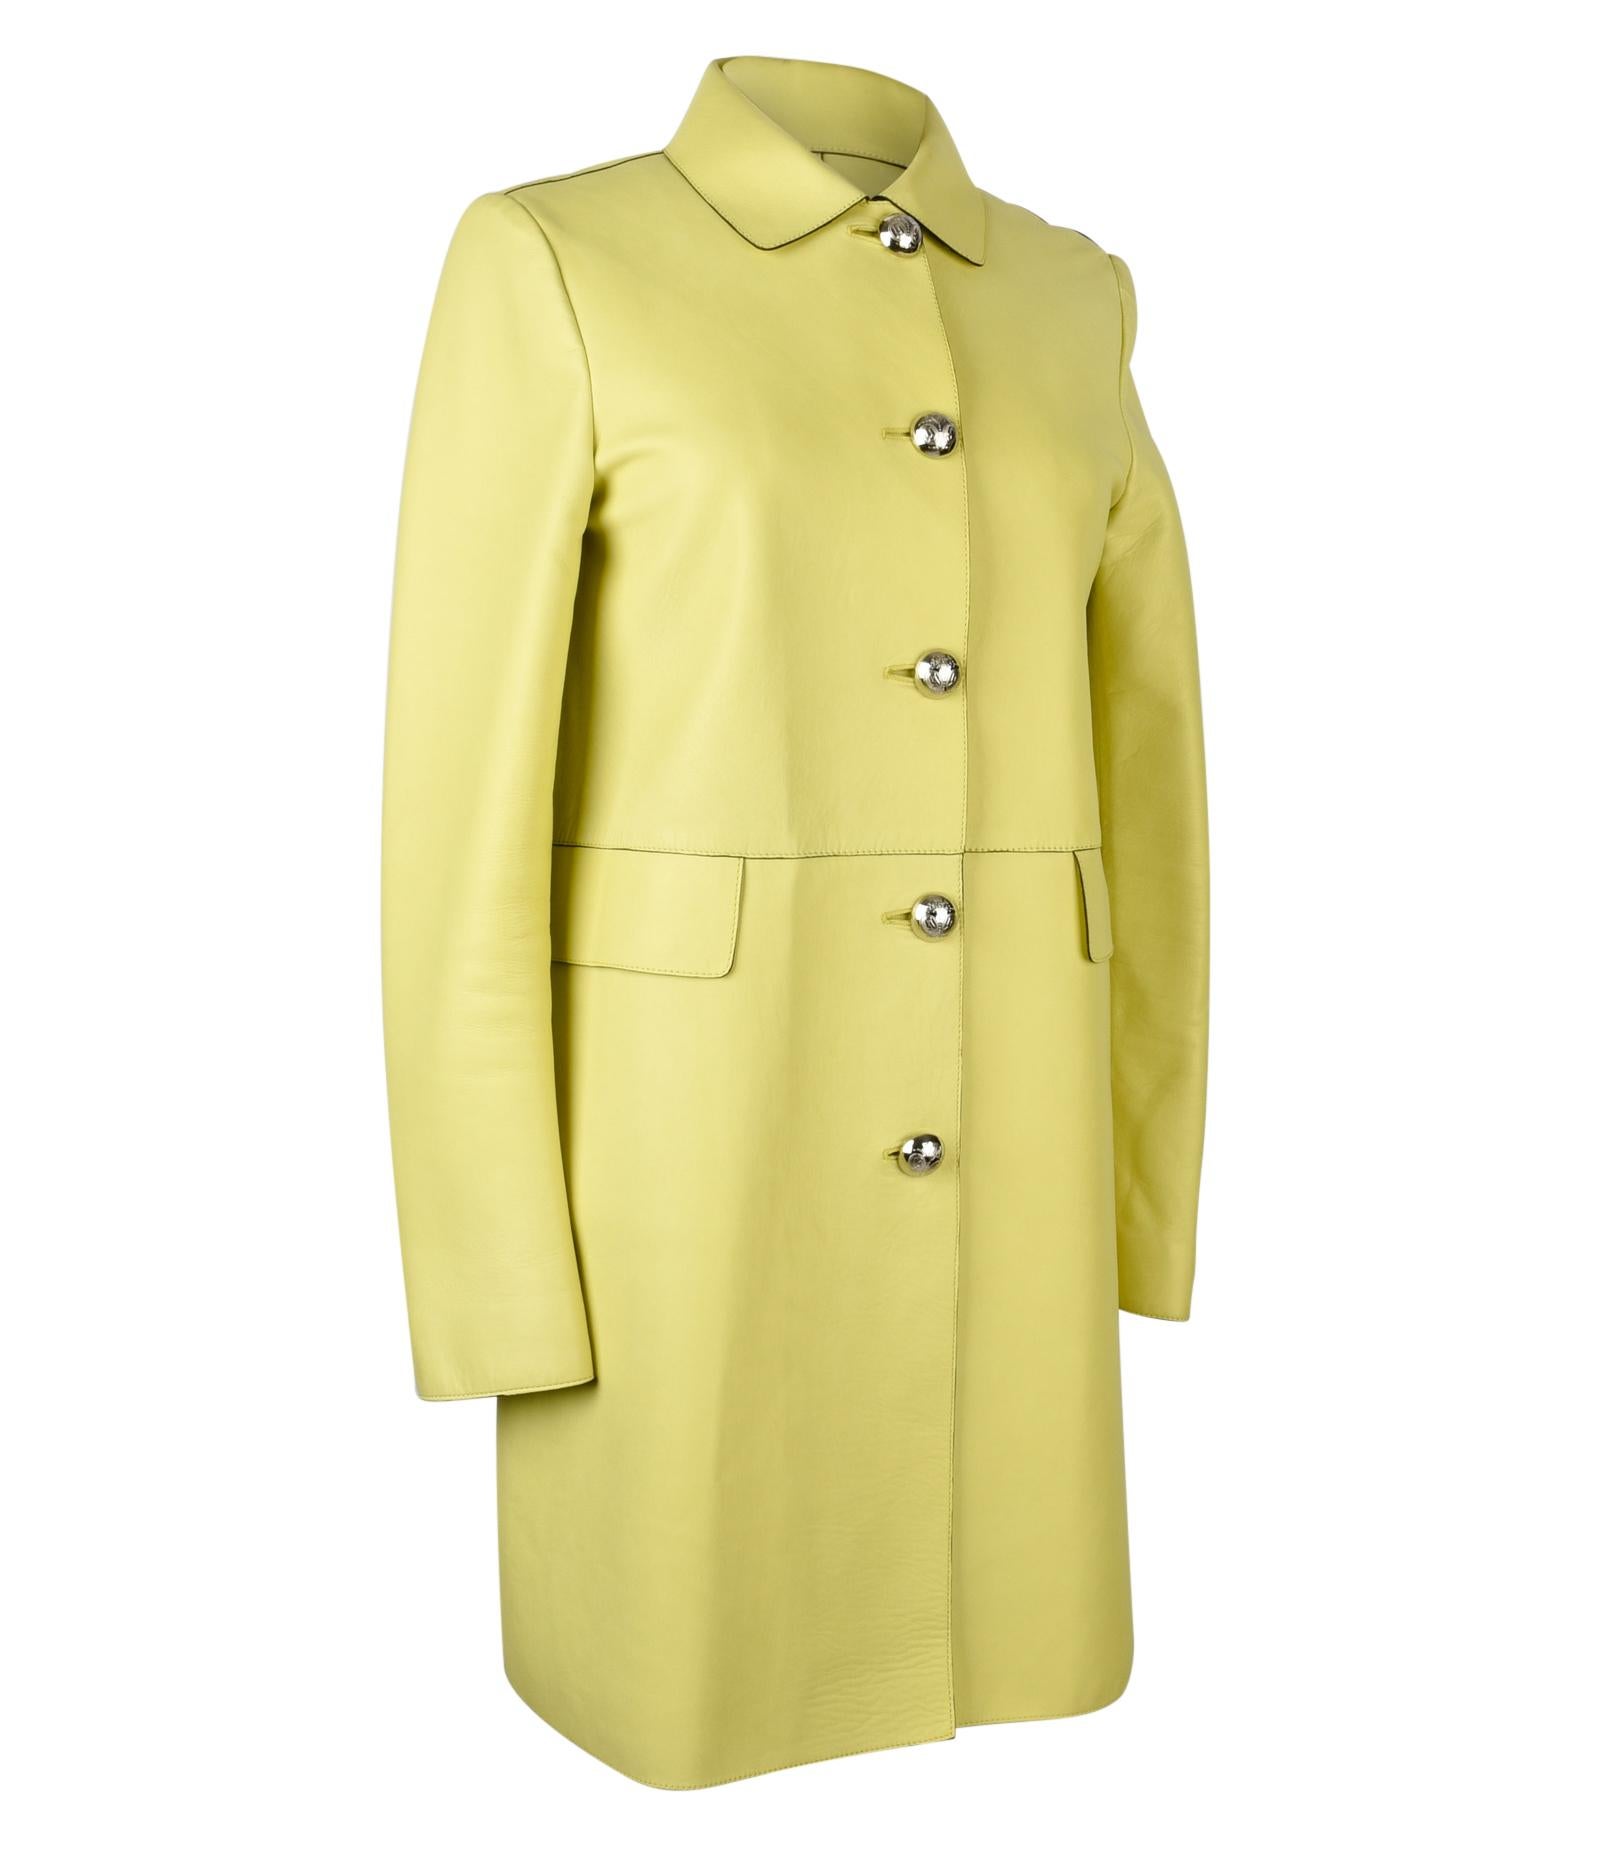 Gucci Coat Lambskin Leather Lime Yellow 40 / 8 4